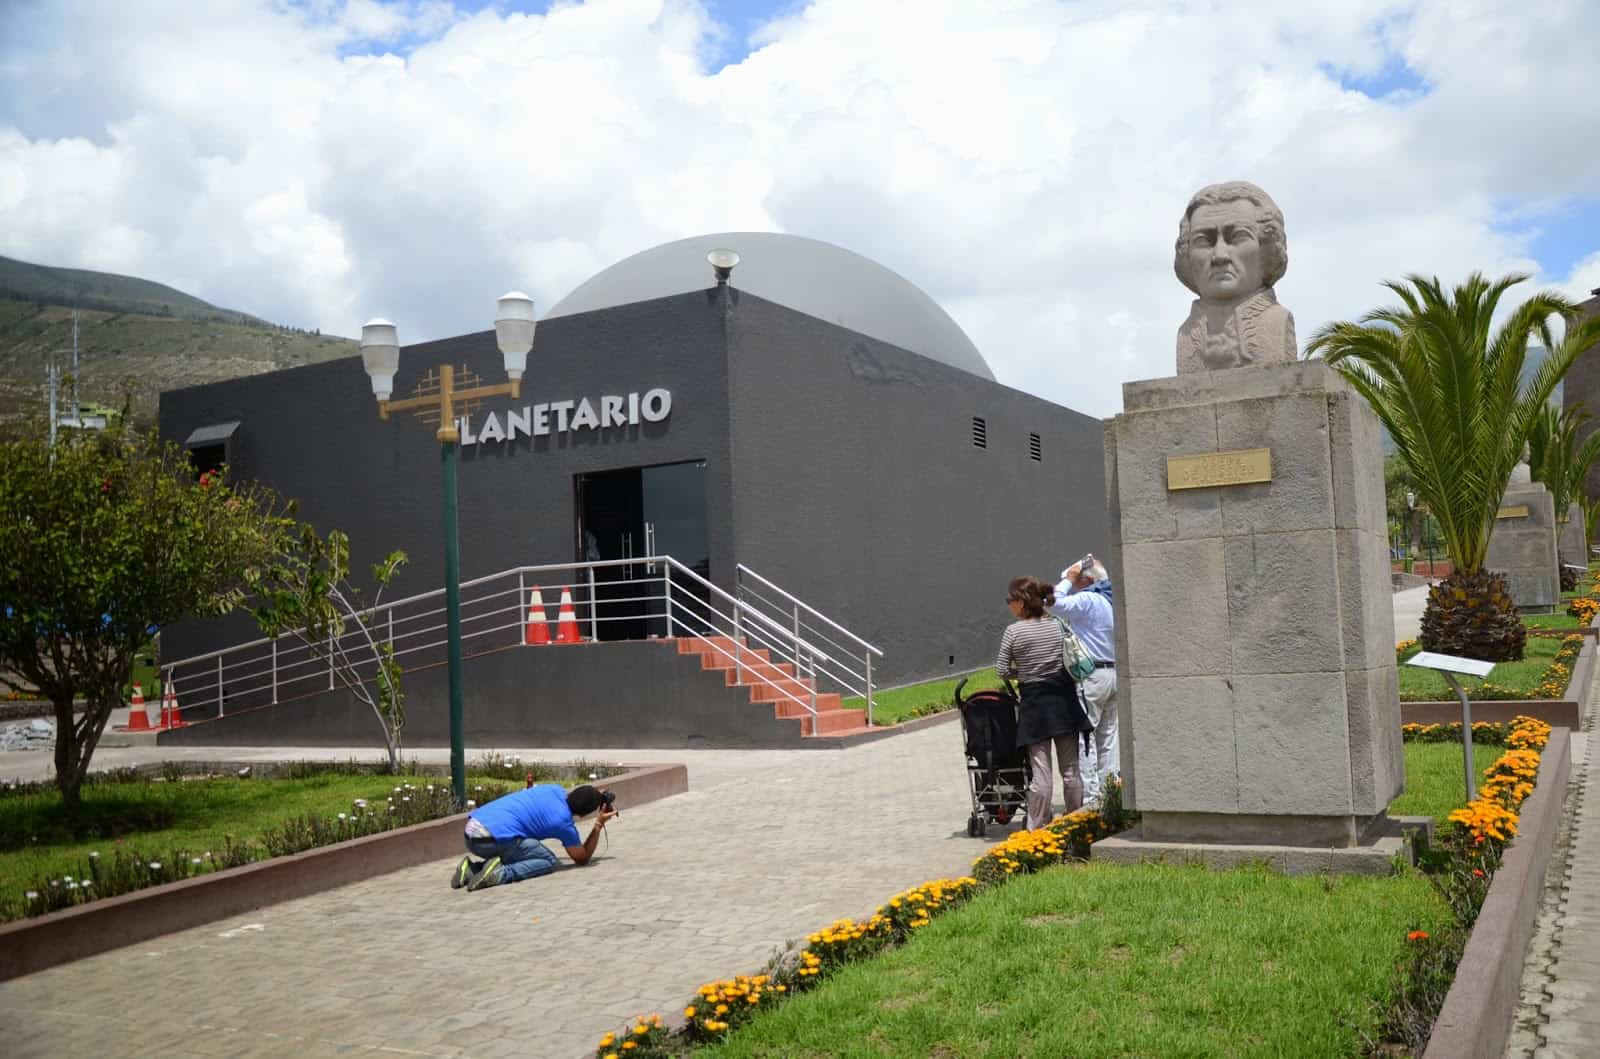 Planetarium at Mitad del Mundo in Ecuador